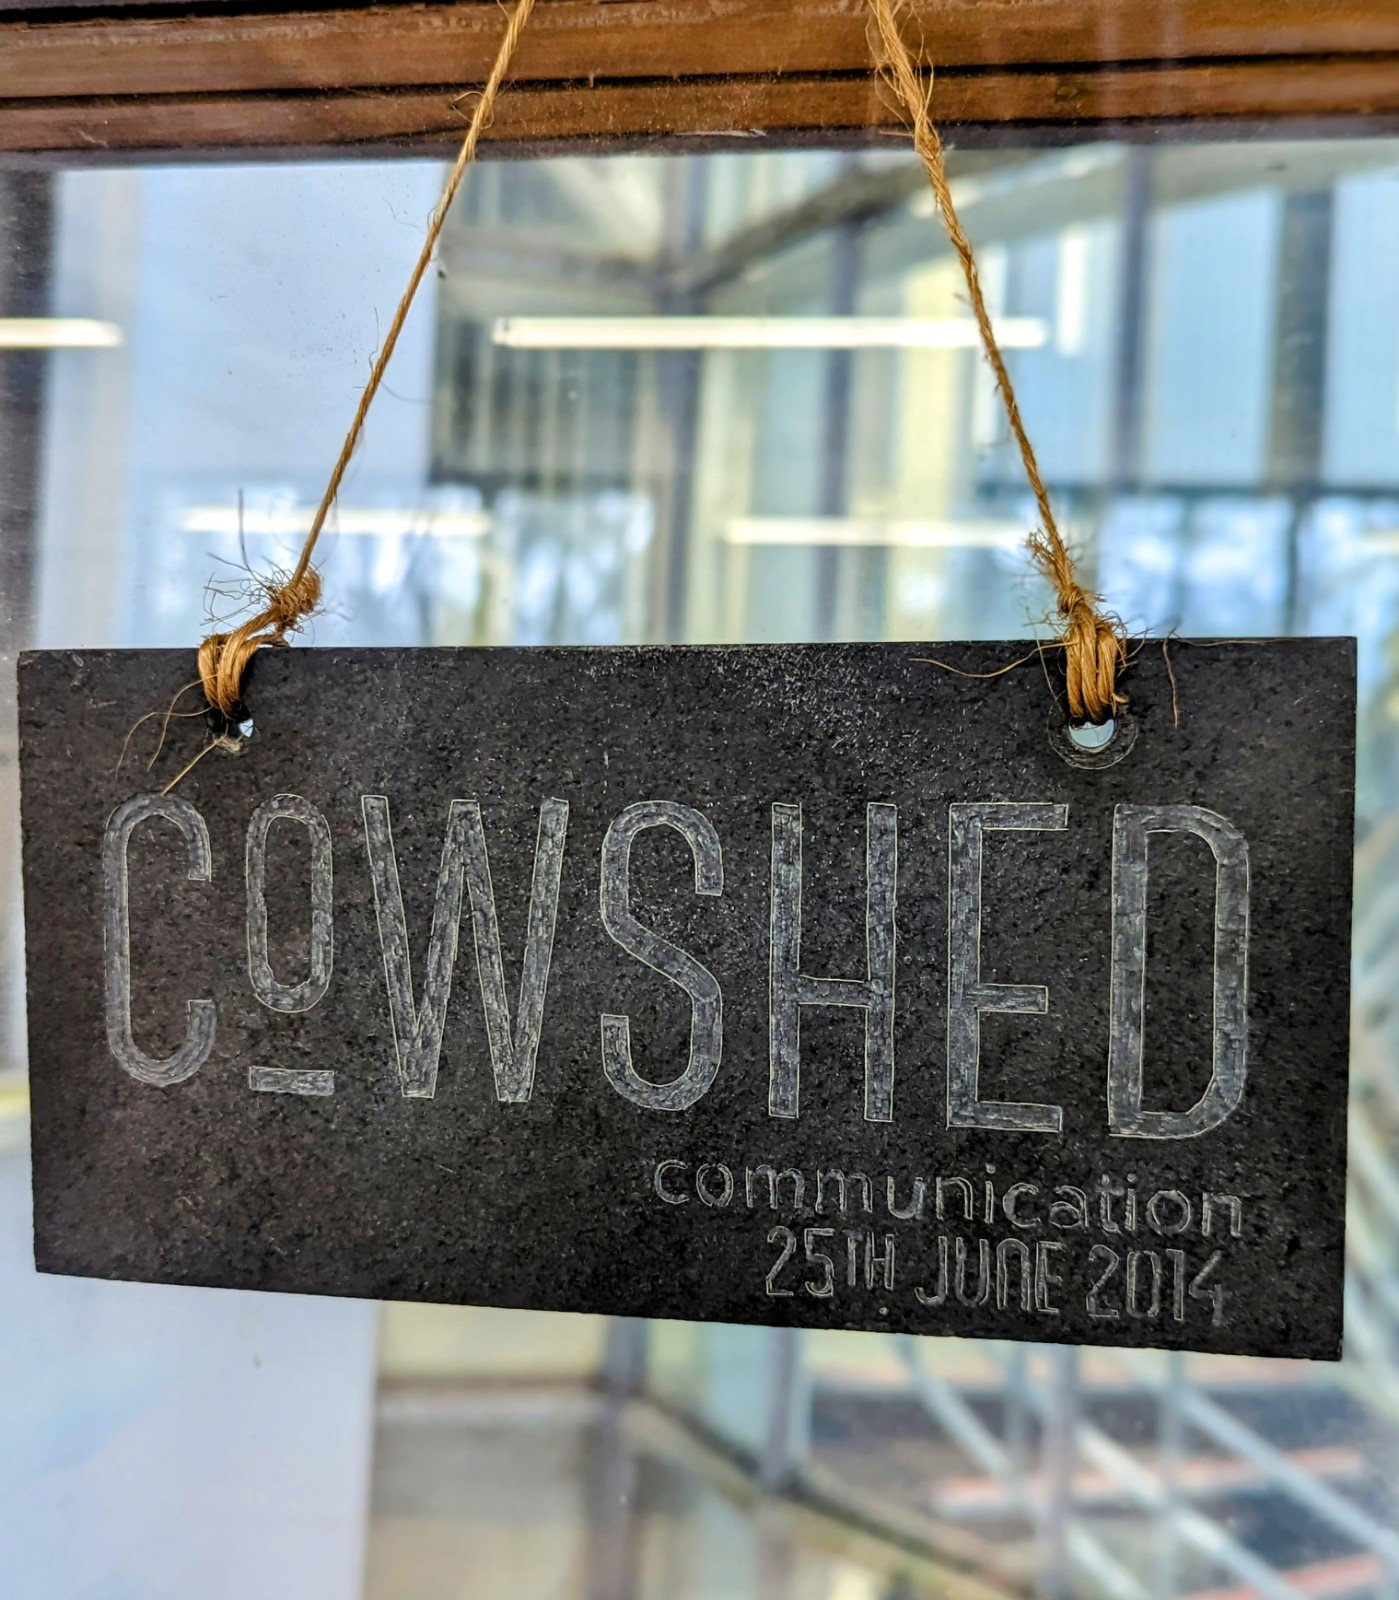 Cowshed logo.jpg